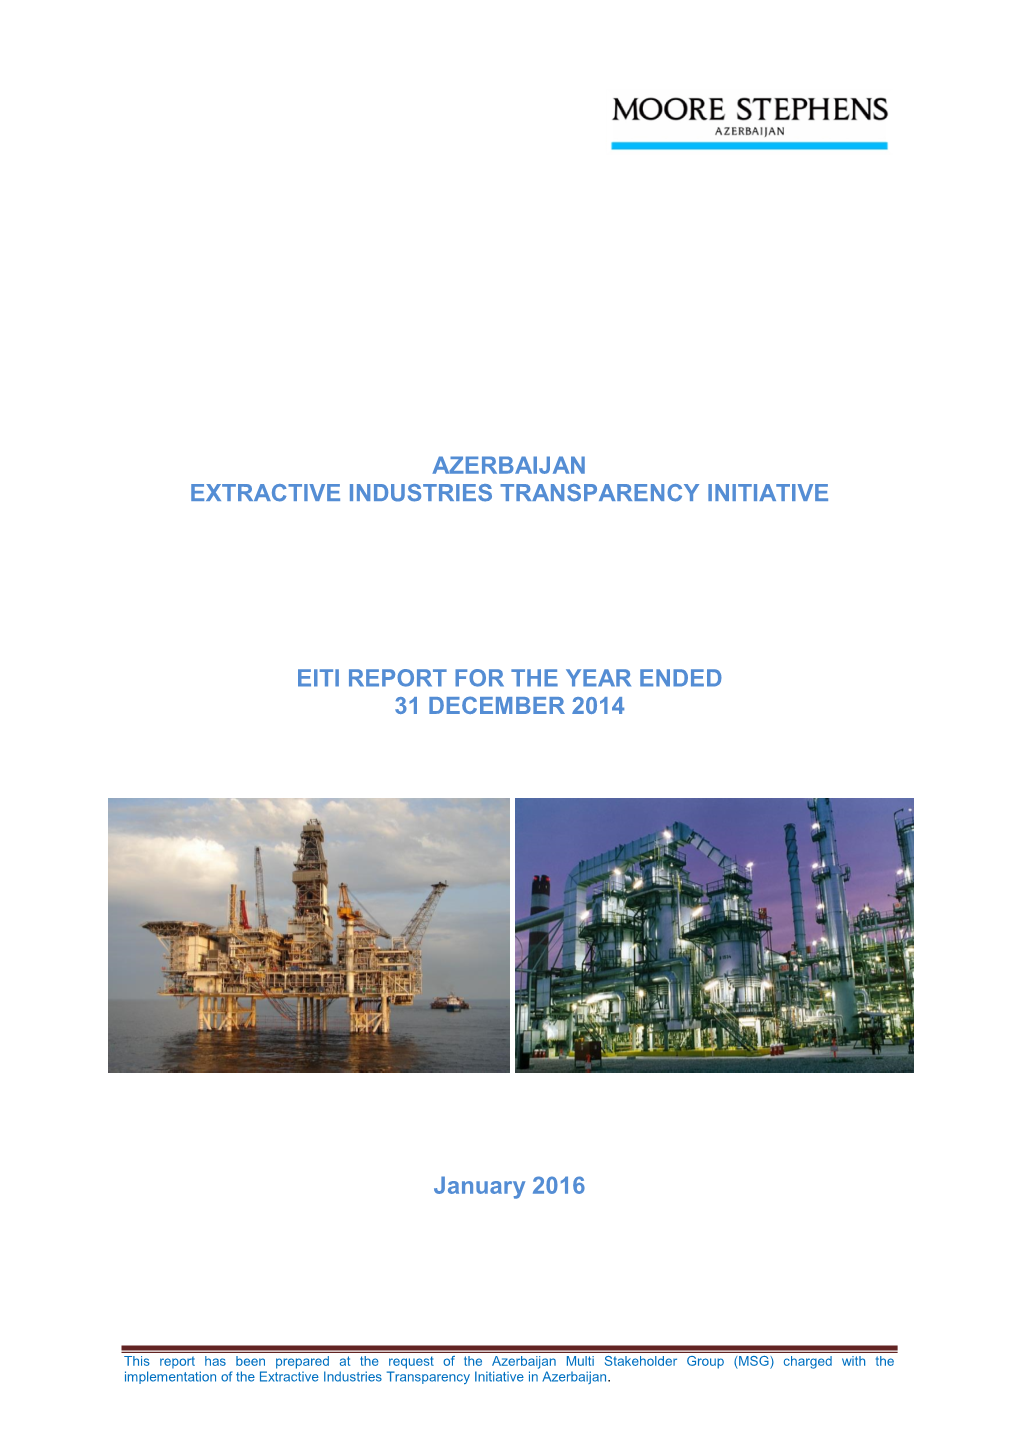 Azerbaijan Extractive Industries Transparency Initiative